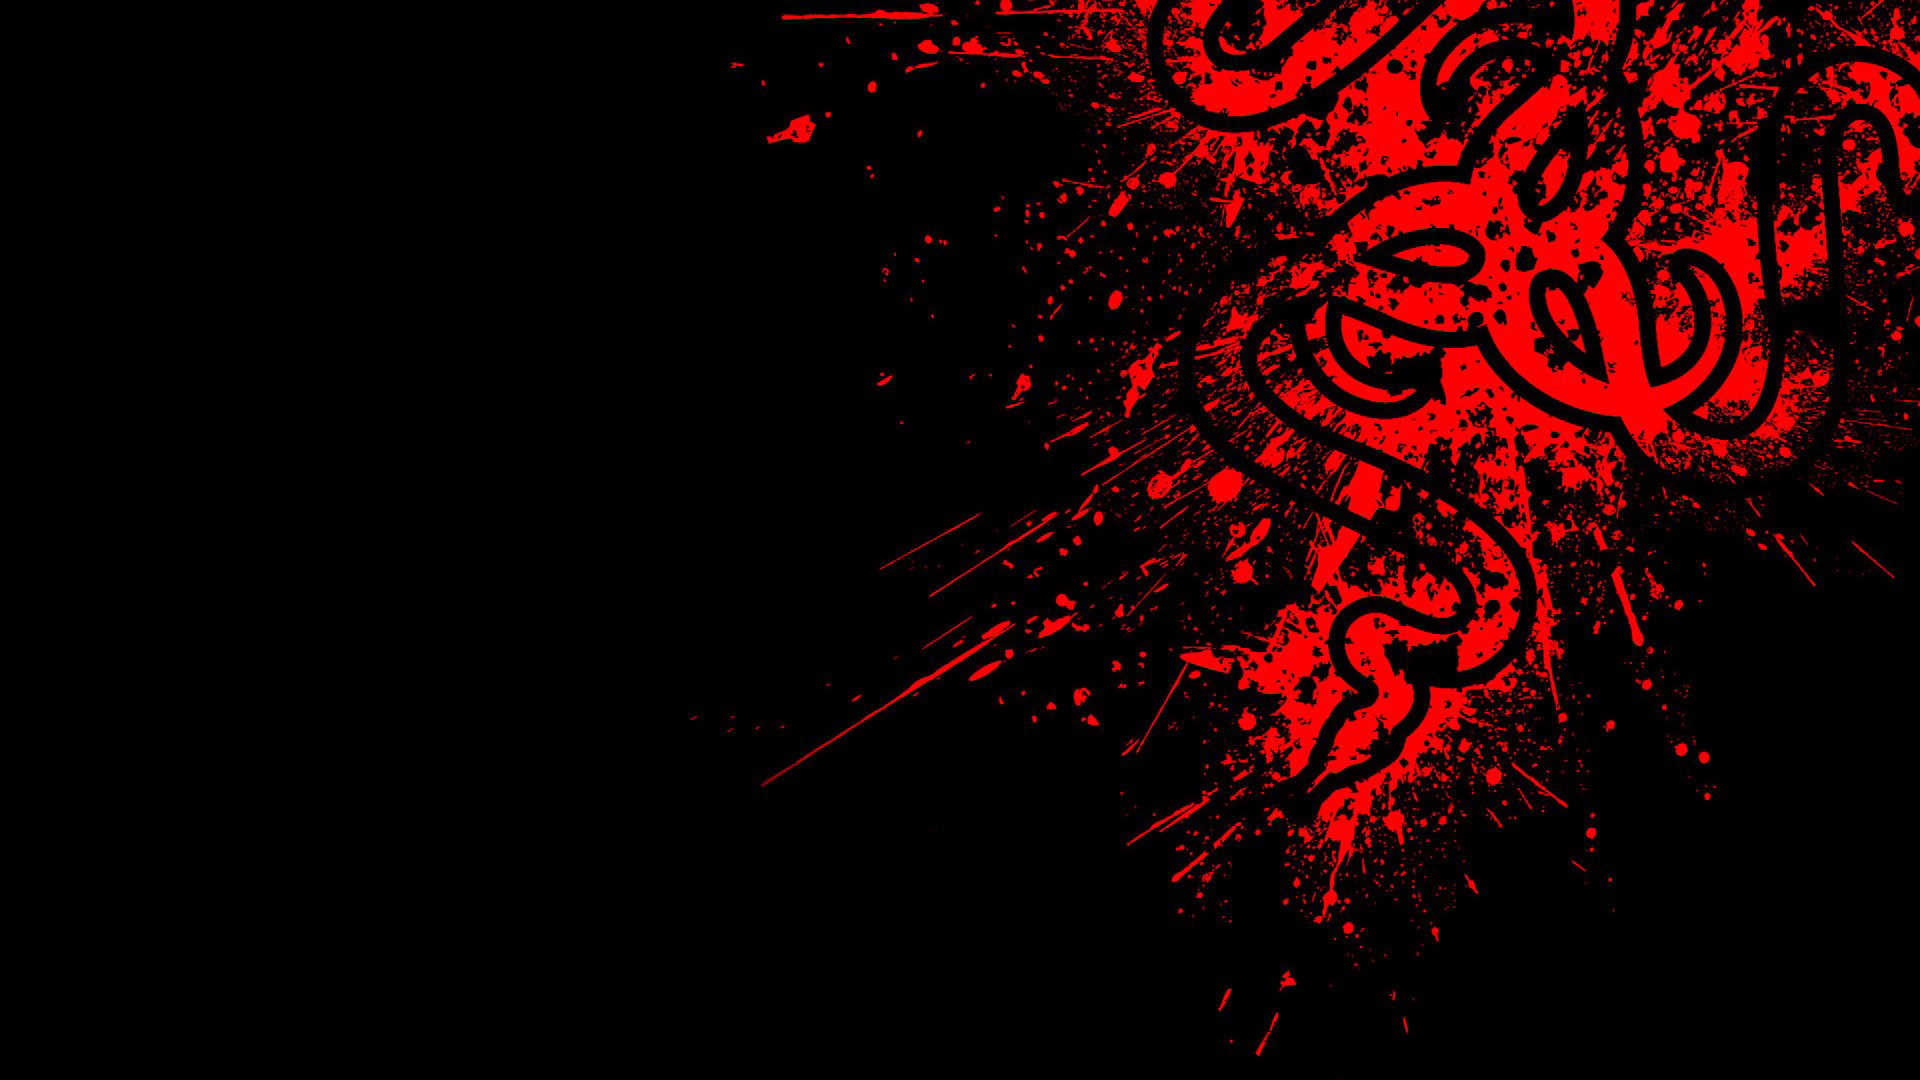 red razer logo black background hd 1920x1080 1080p wallpaper 1920x1080